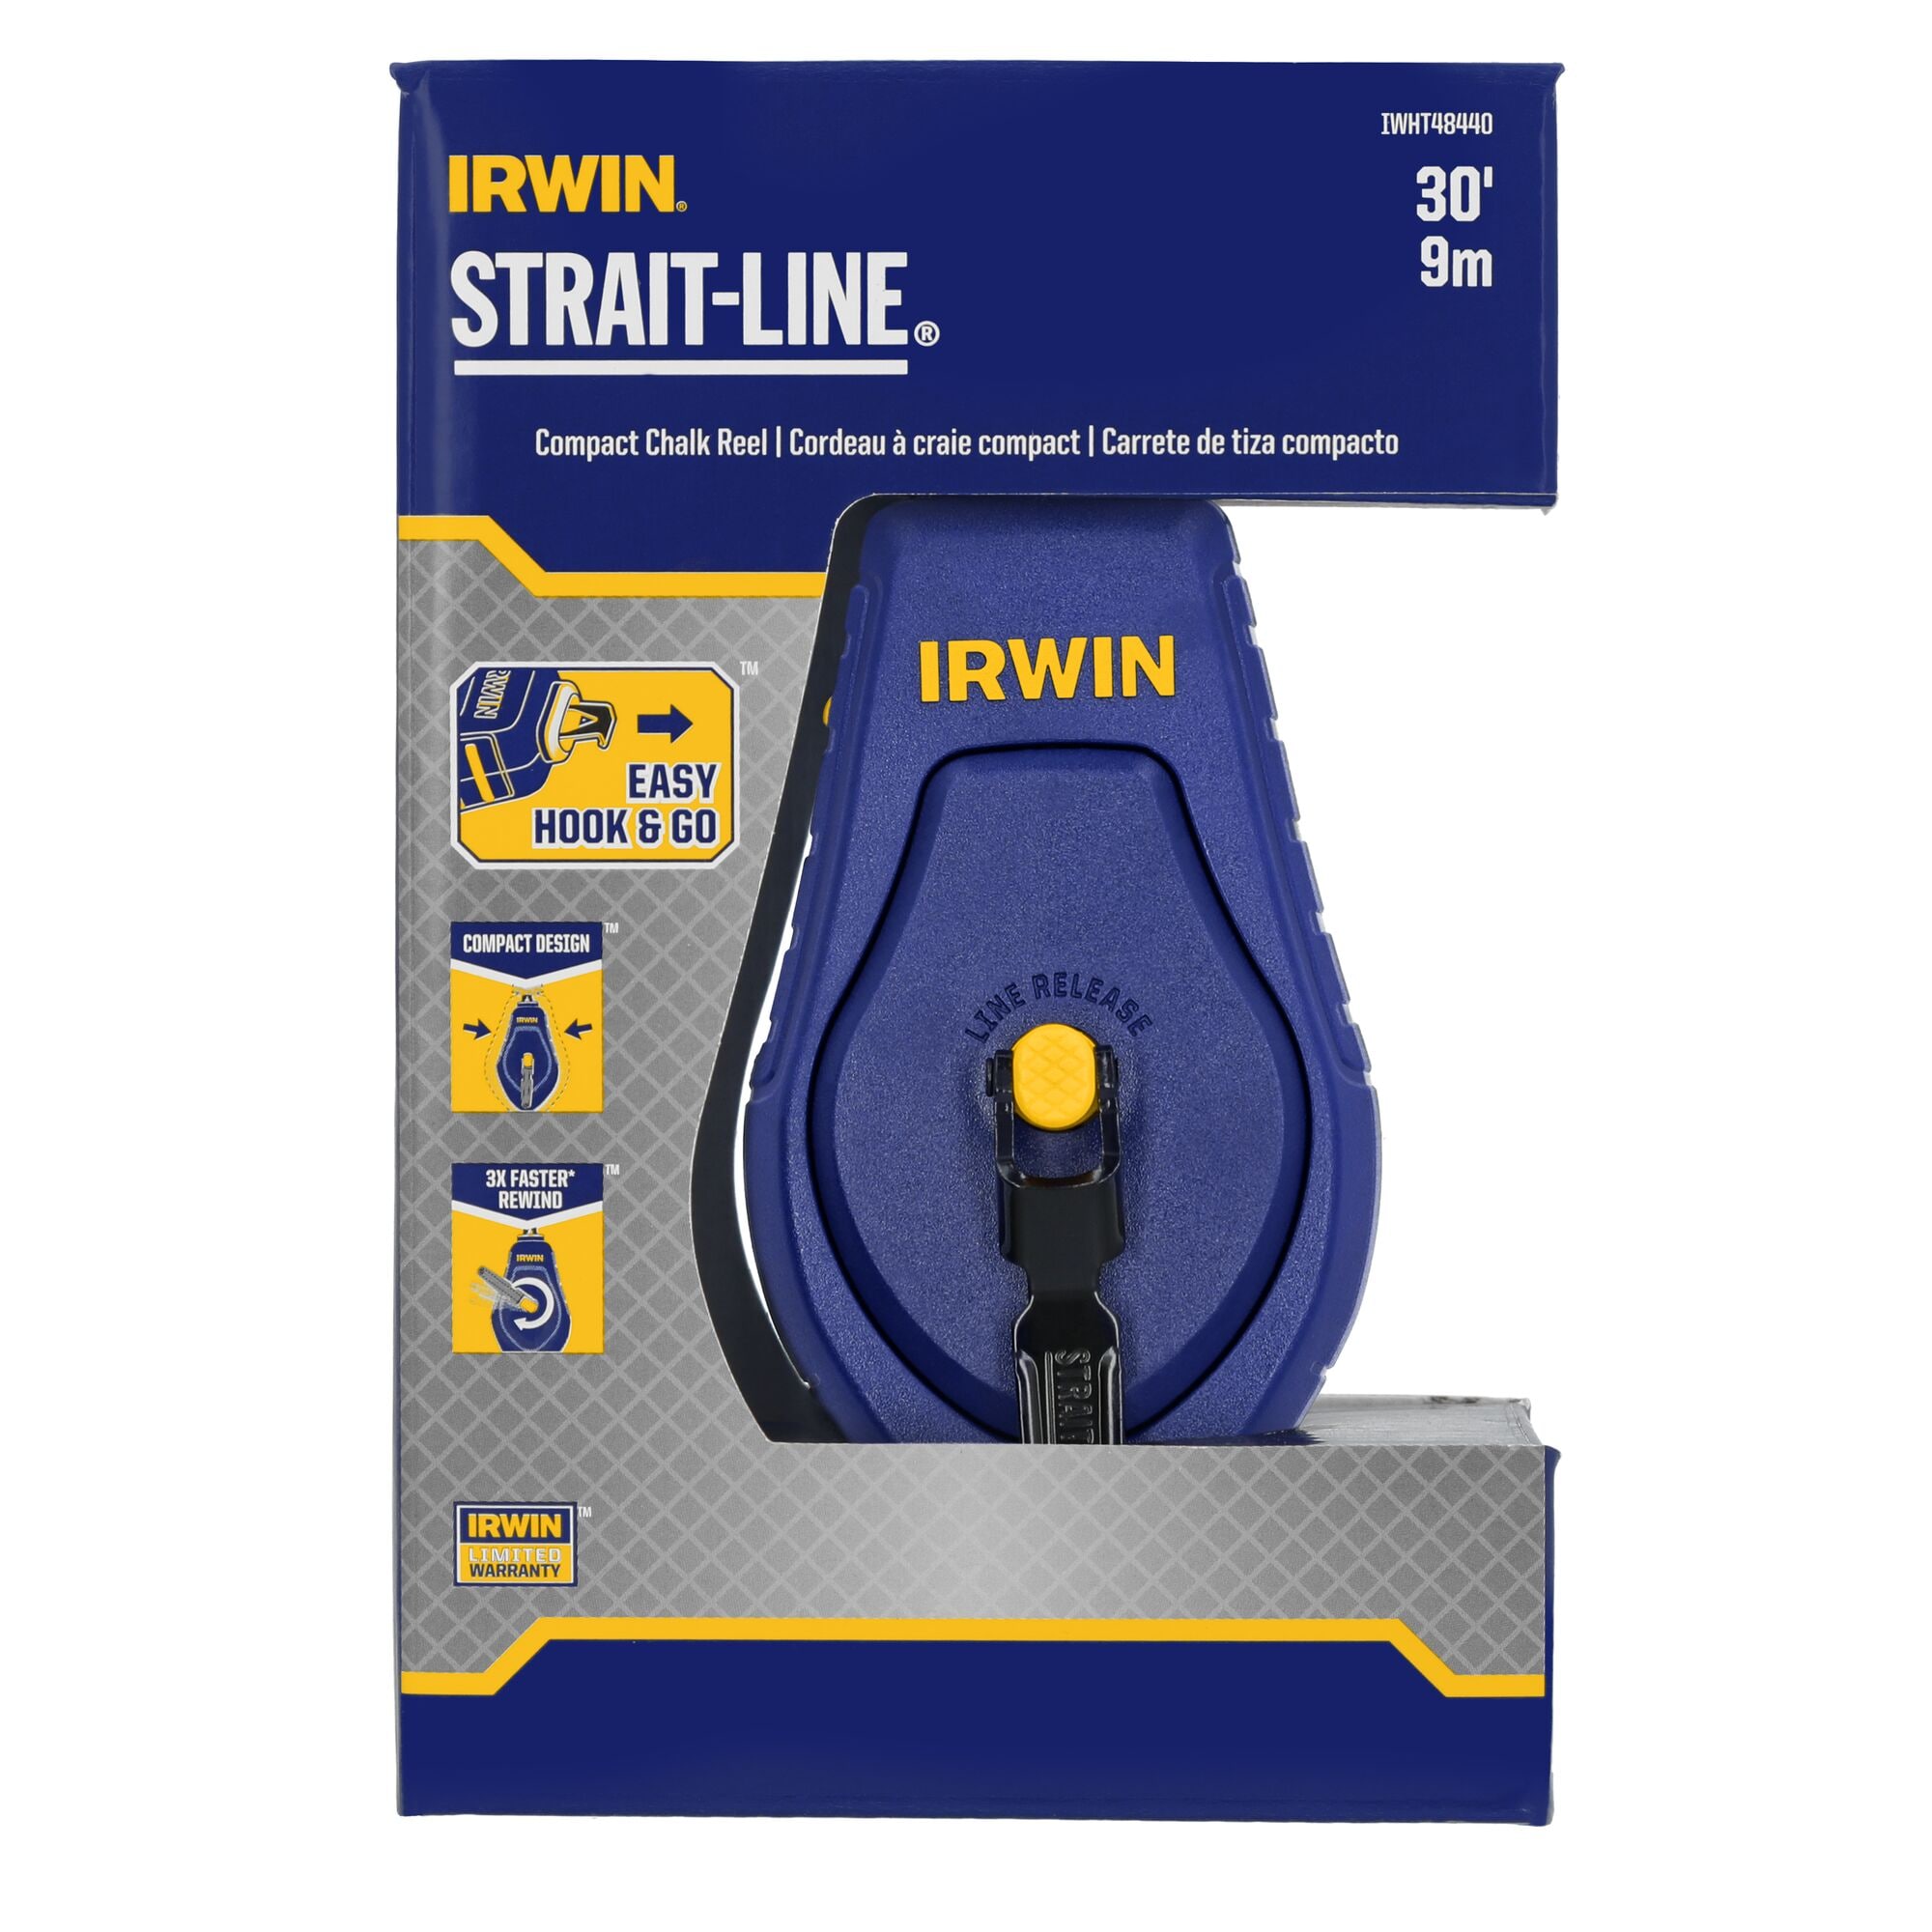 Irwin 100ft Strait-Line Compact Chalk Reel - IWHT48440